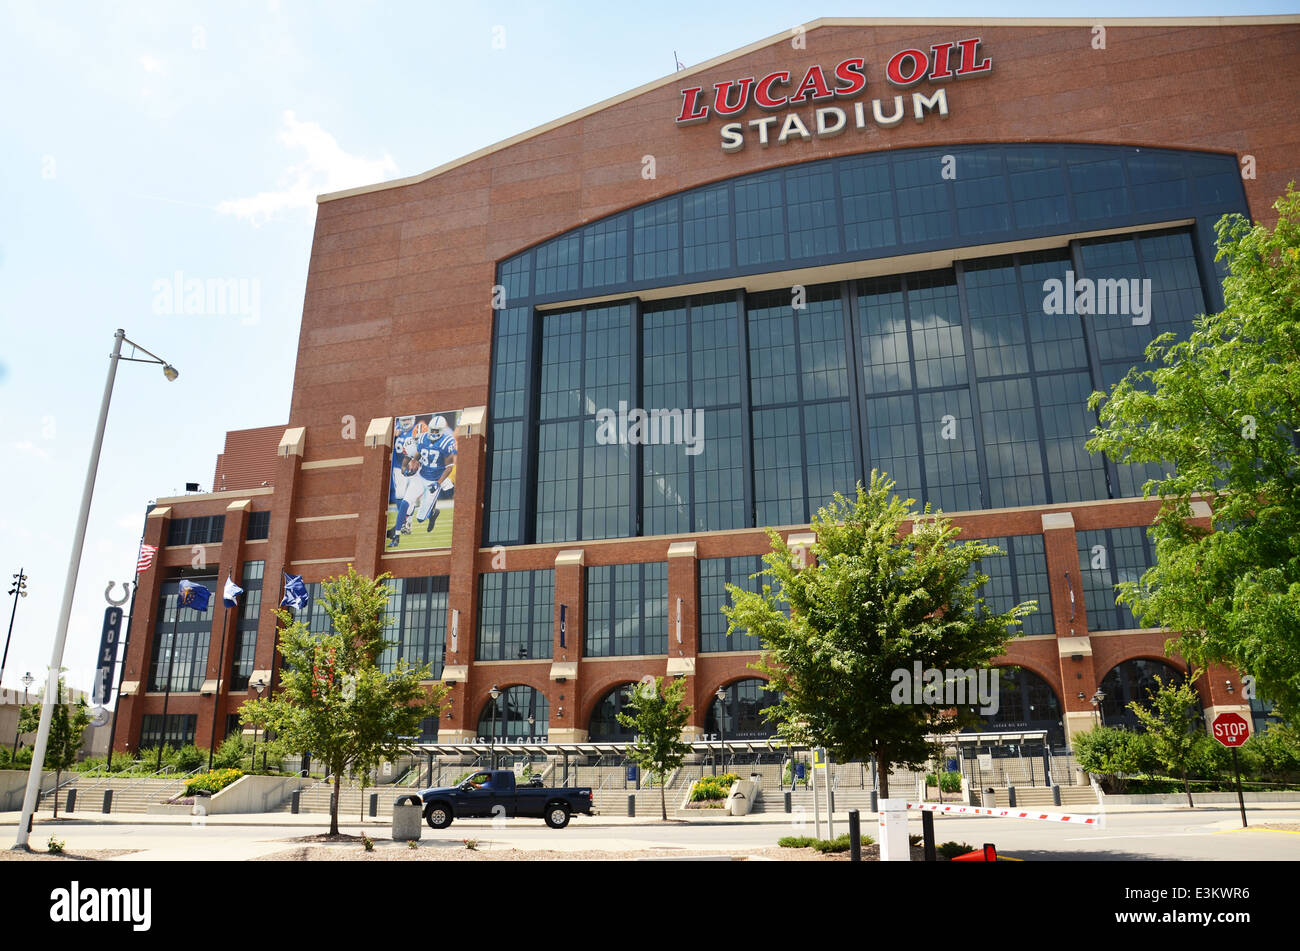 INDIANAPOLIS - 17.Juni: Lucas Oil Stadium, Heimat des Indianapolis Colts Football-Teams, 17. Juni 2014 gezeigt wird. Es umfasst nearl Stockfoto